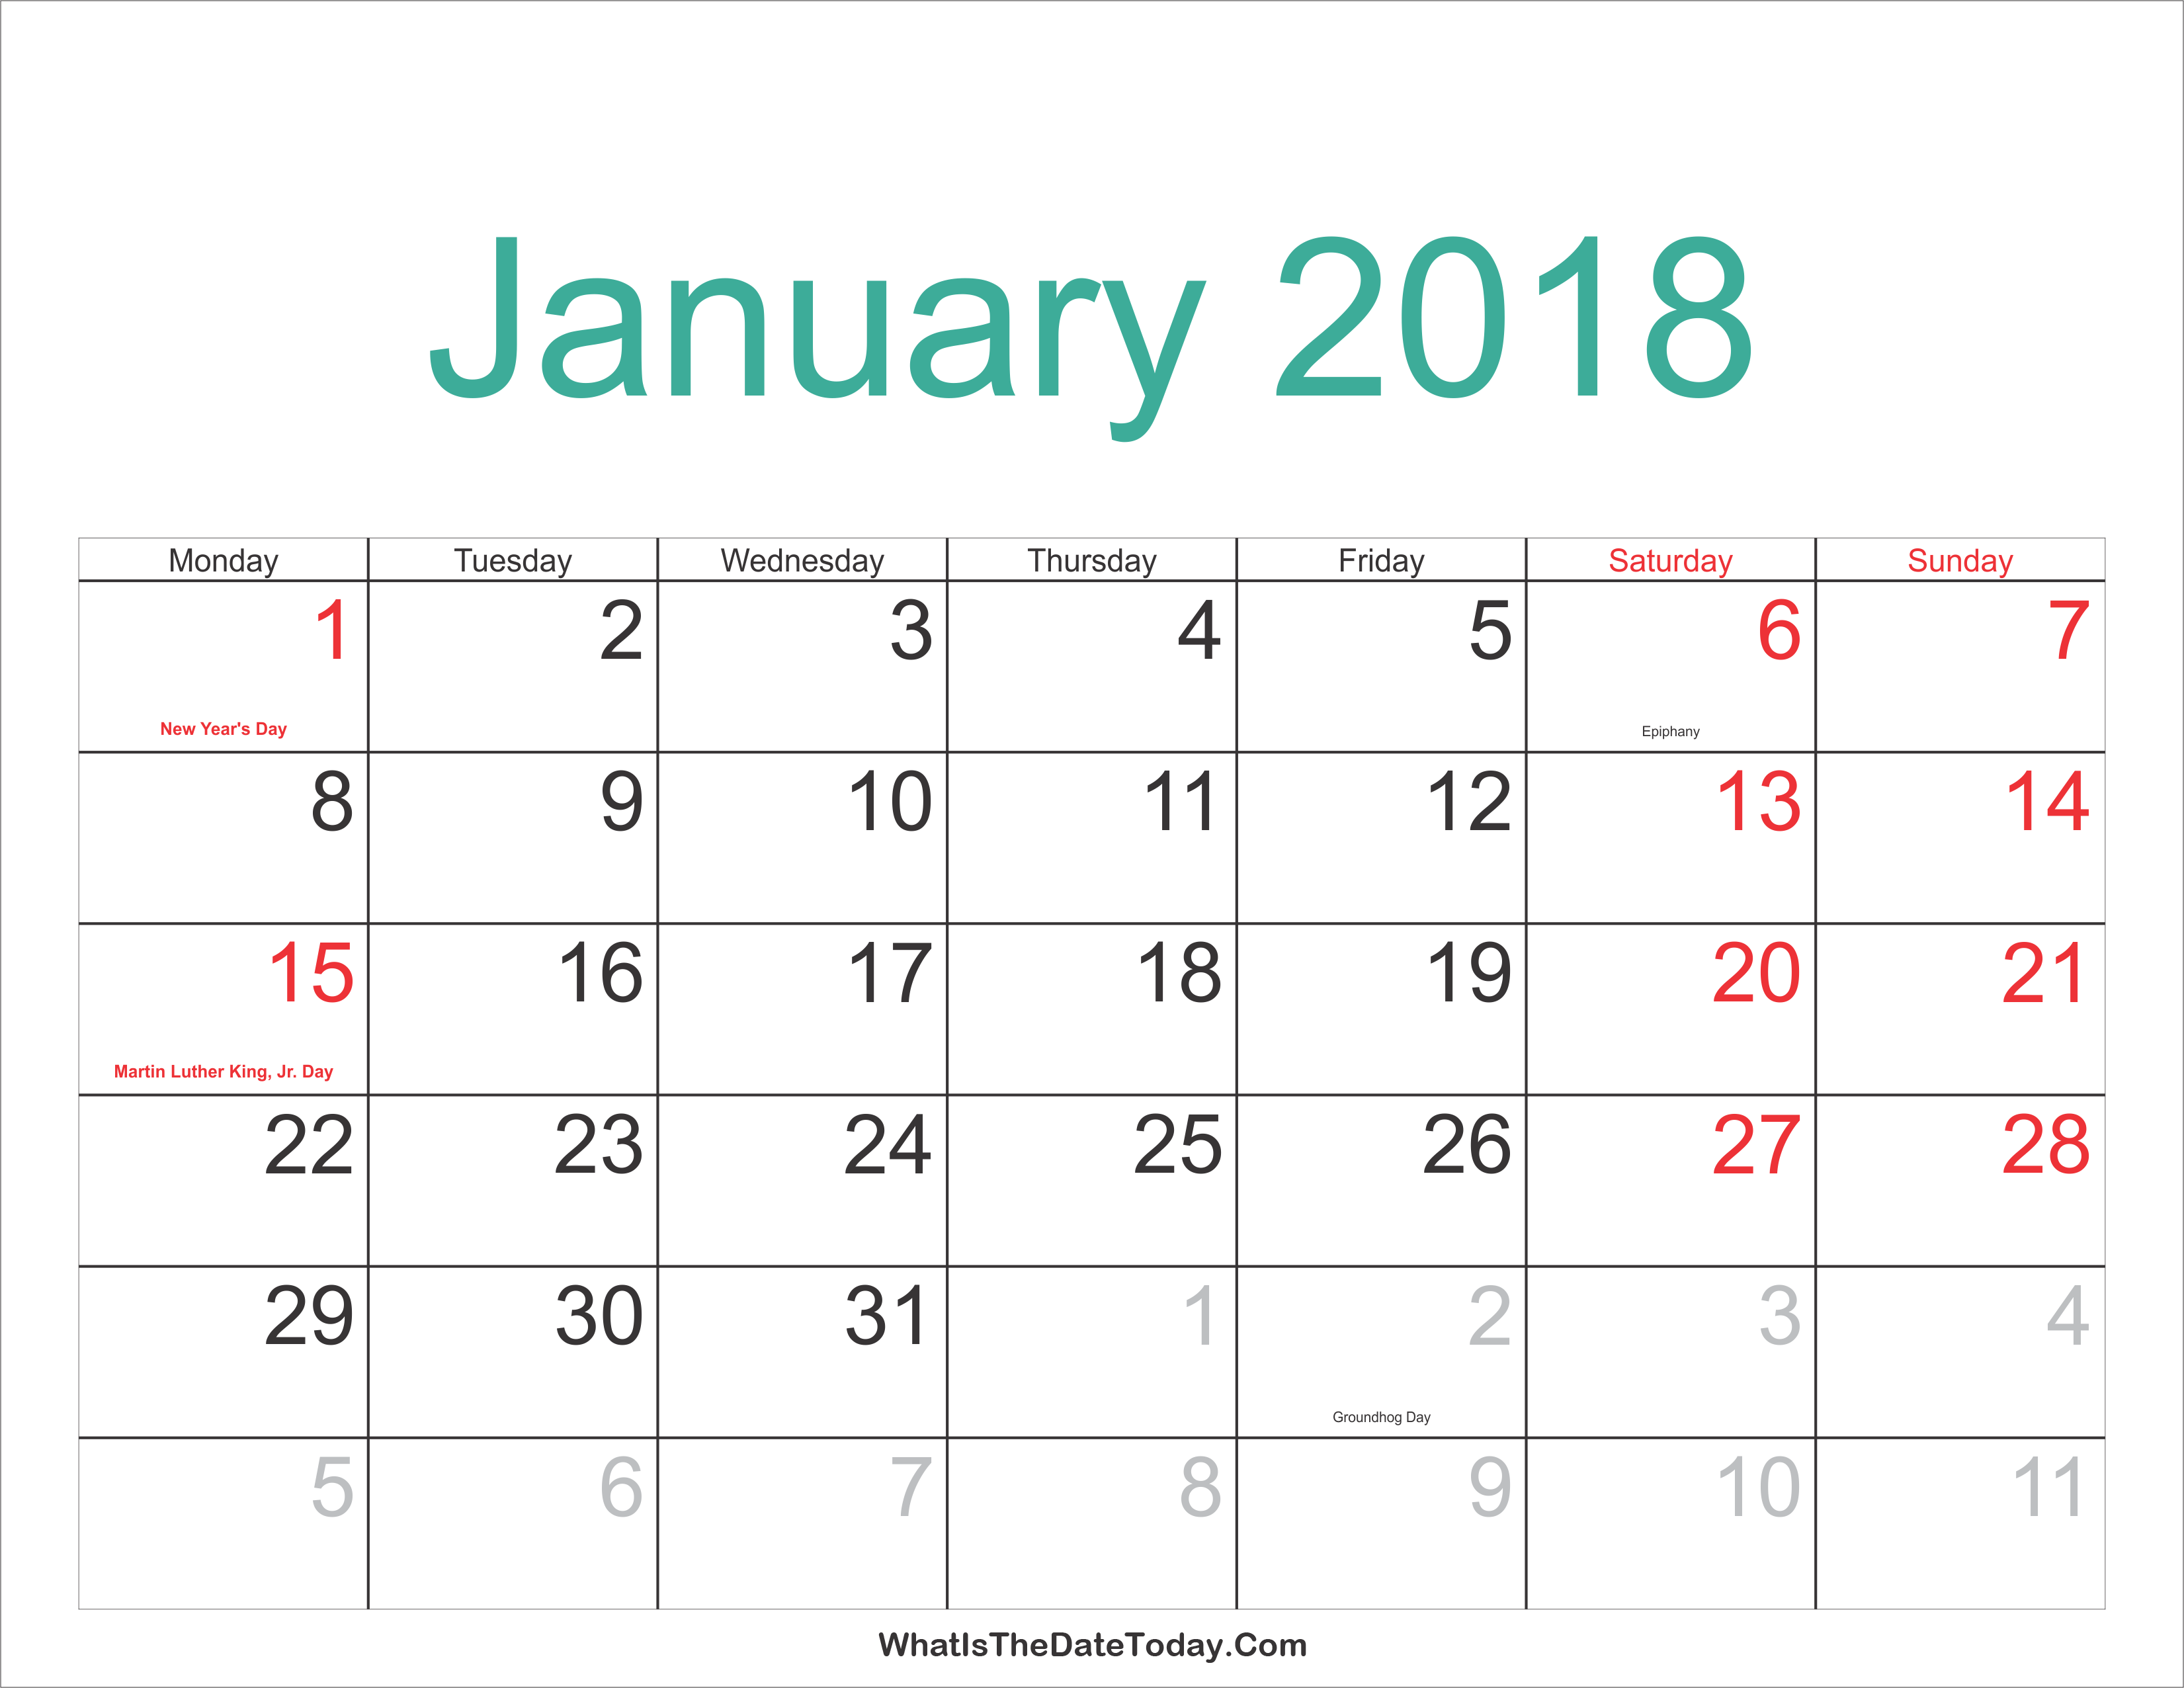 January 2018 Calendar Printable with Holidays | Whatisthedatetoday.Com